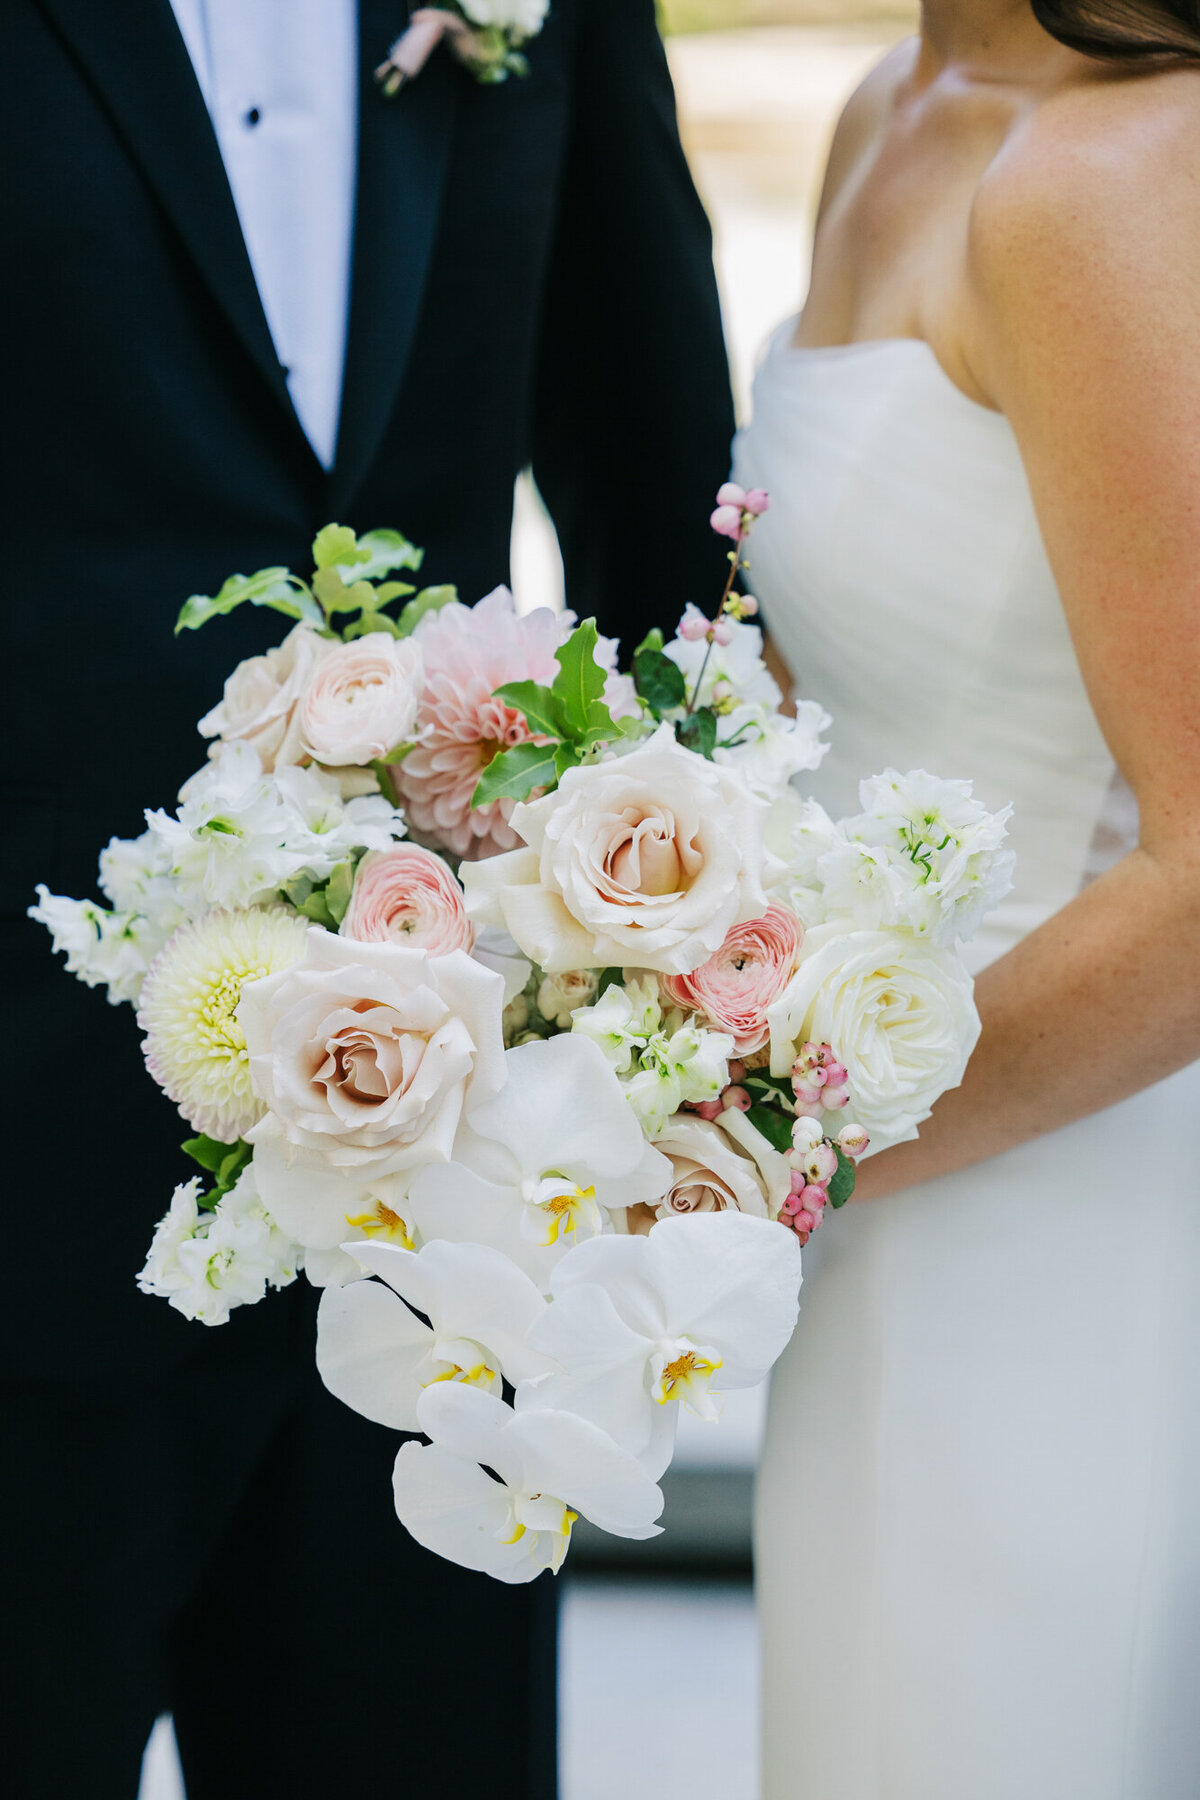 A beautiful bridal bouquet